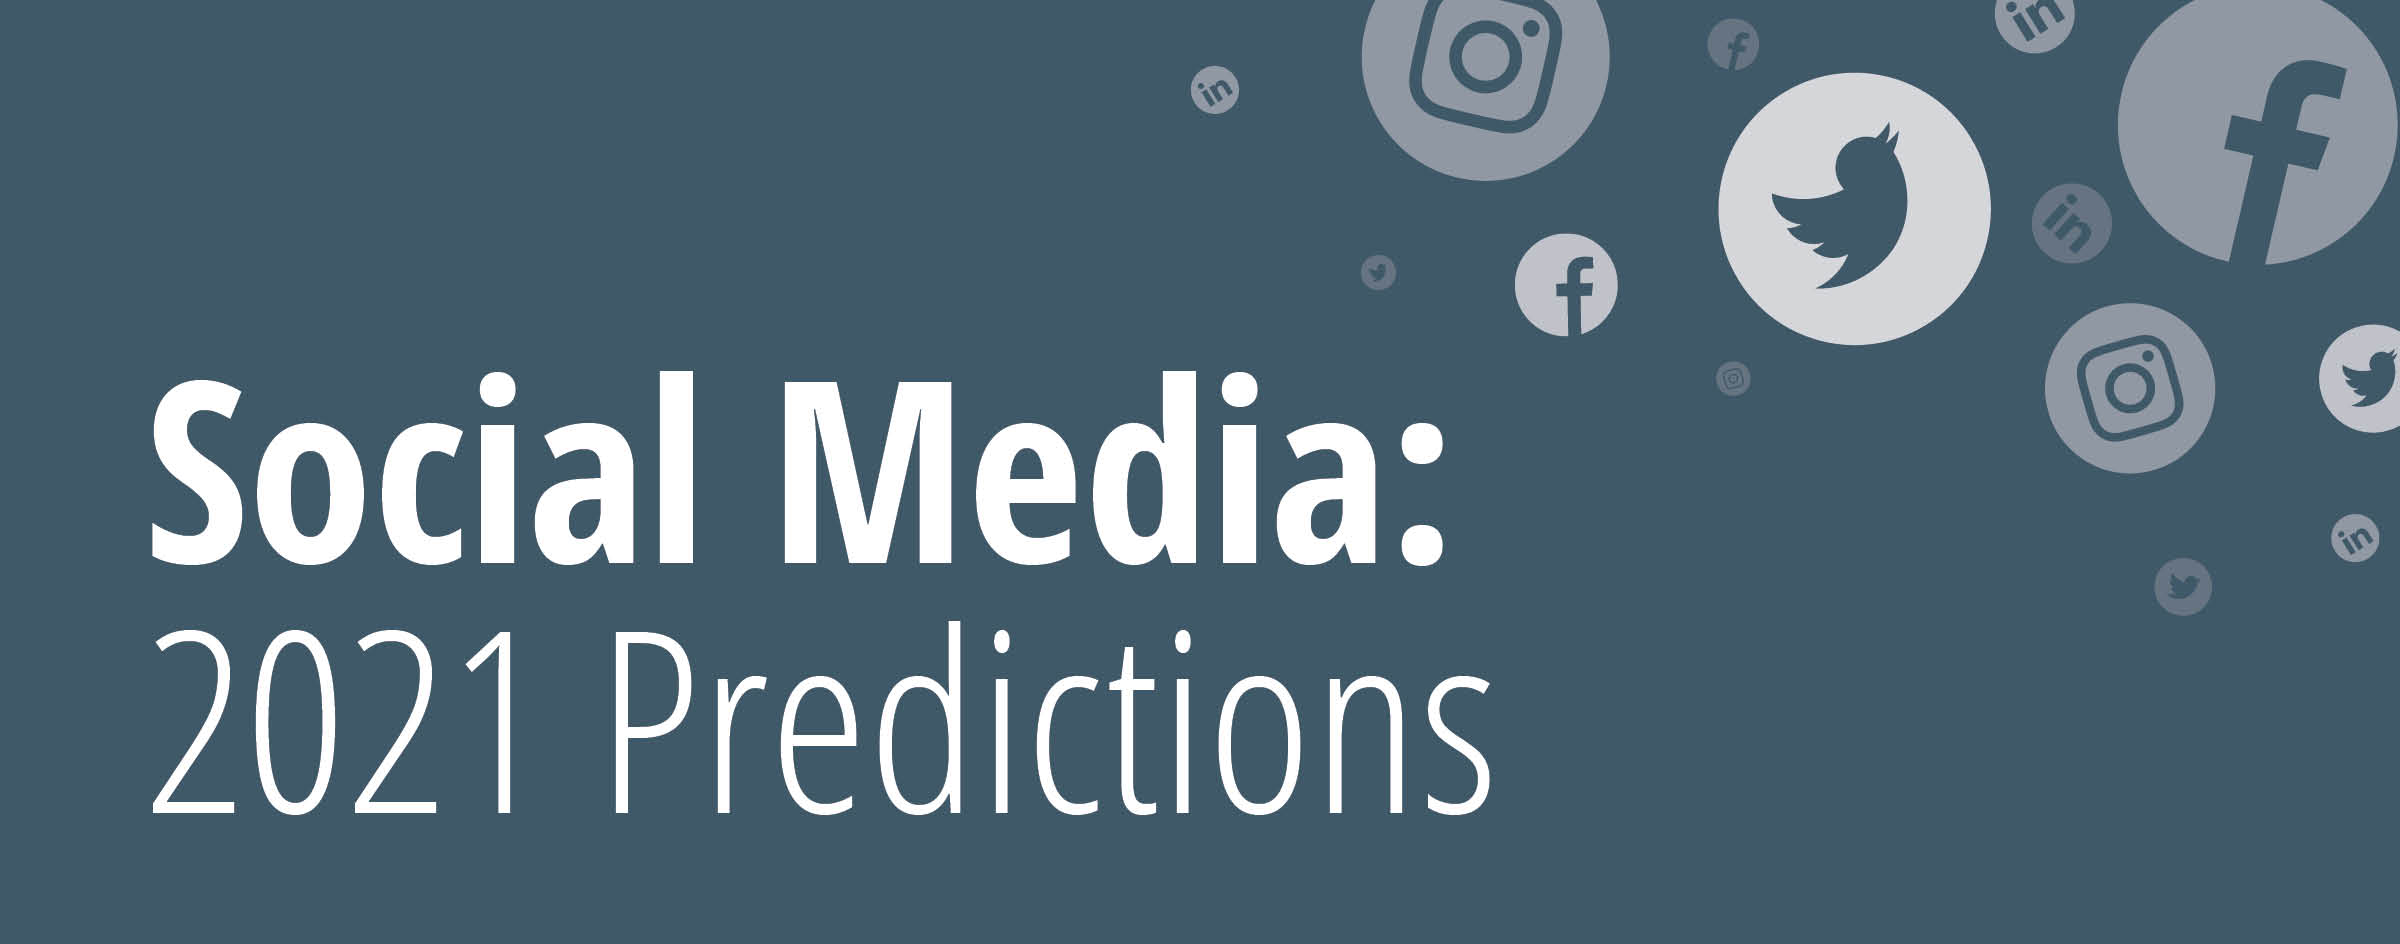 Social Media: LoSasso's 2021 Predictions